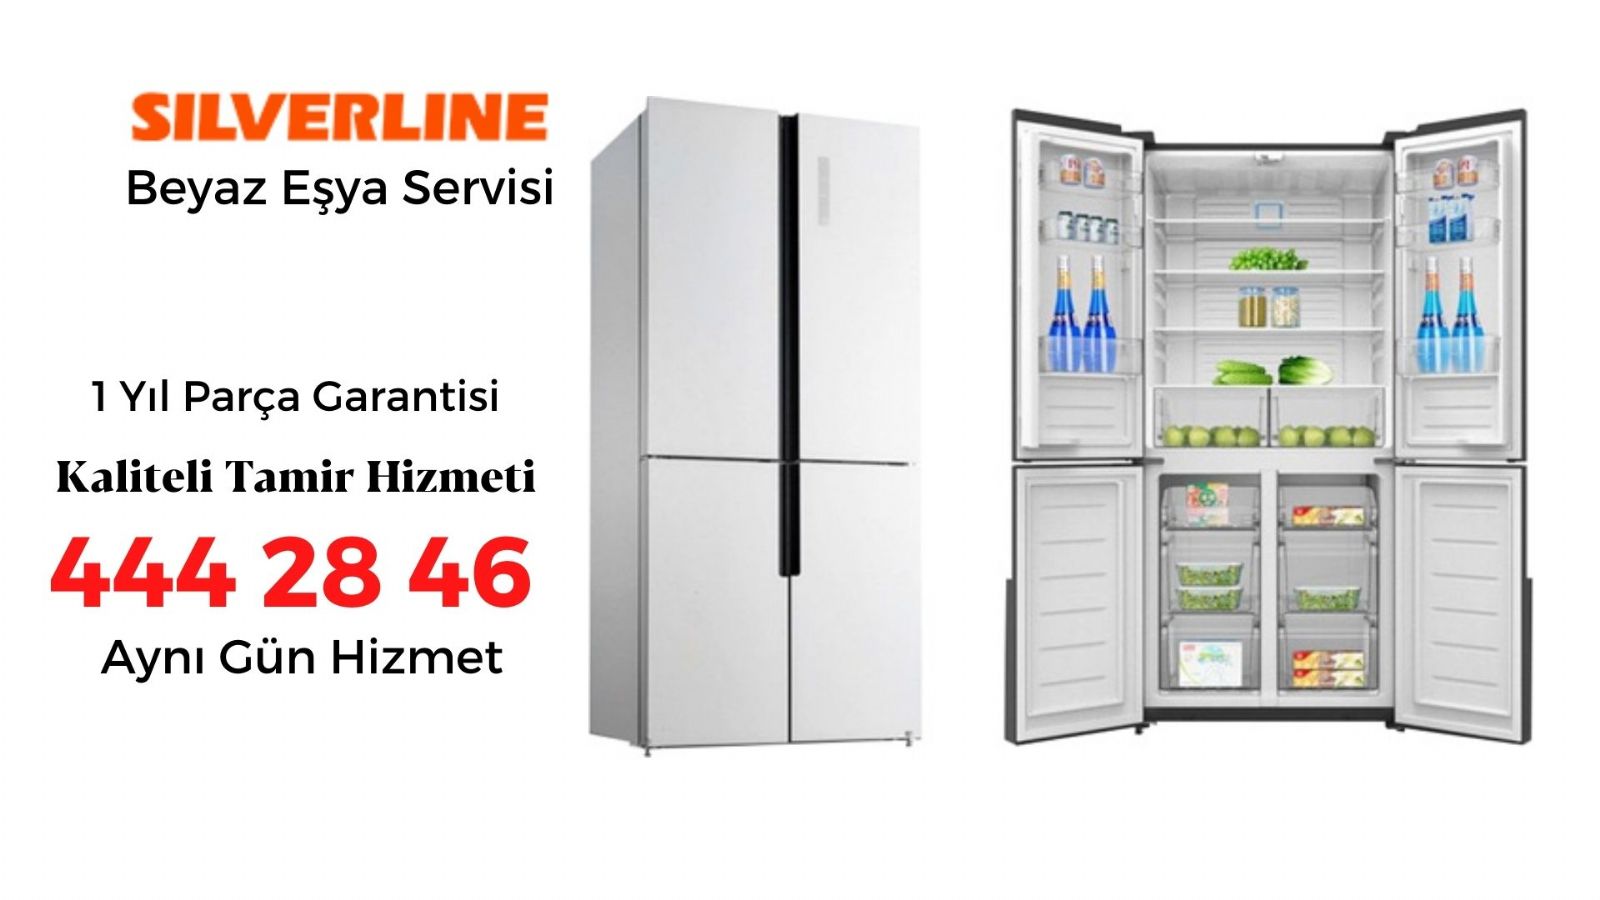 Silverline Buzdolabı Servisi